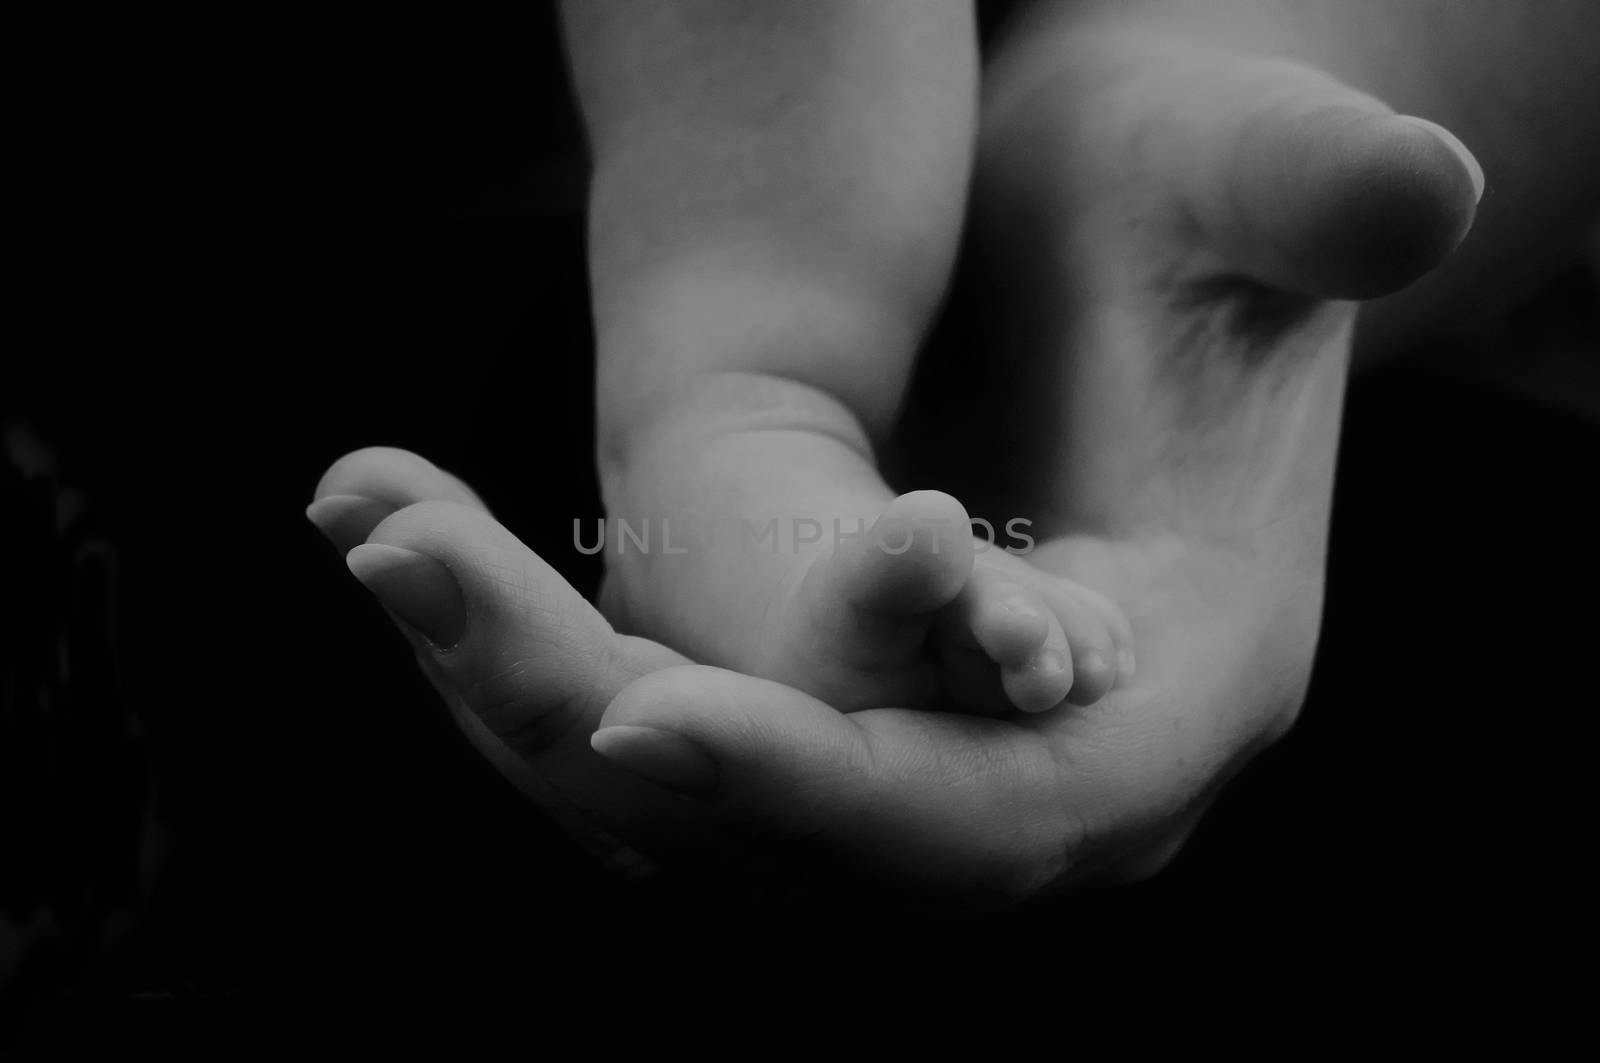 children's leg on mother's hand by byvivik89